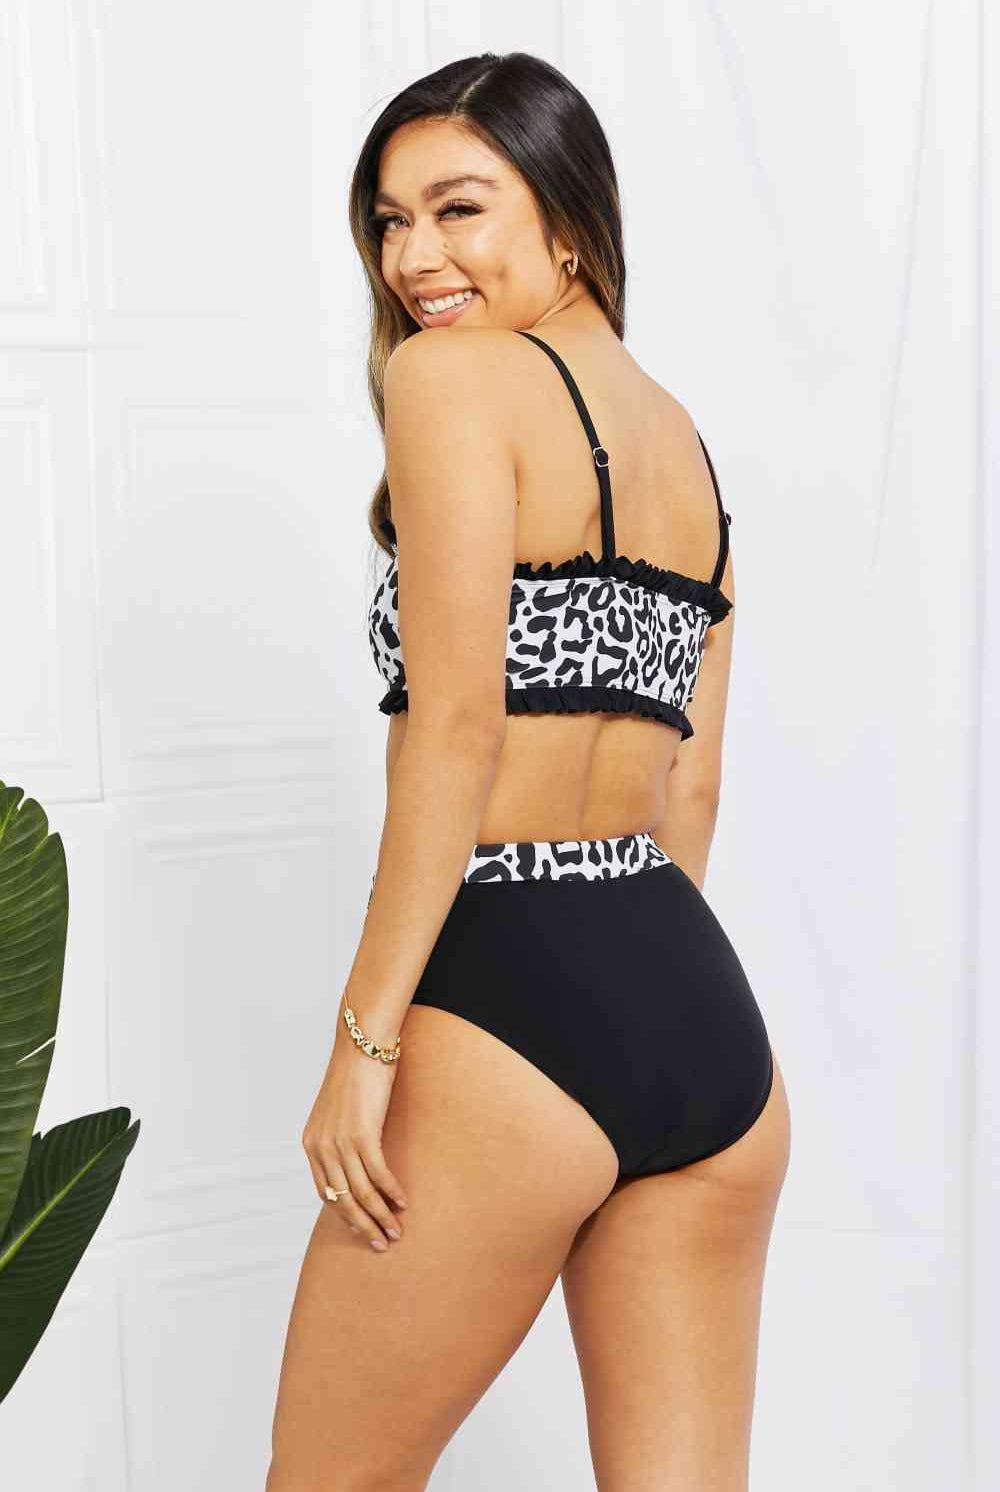 Women's Swimwear - 2PC Frilled Leopard Bikini Set